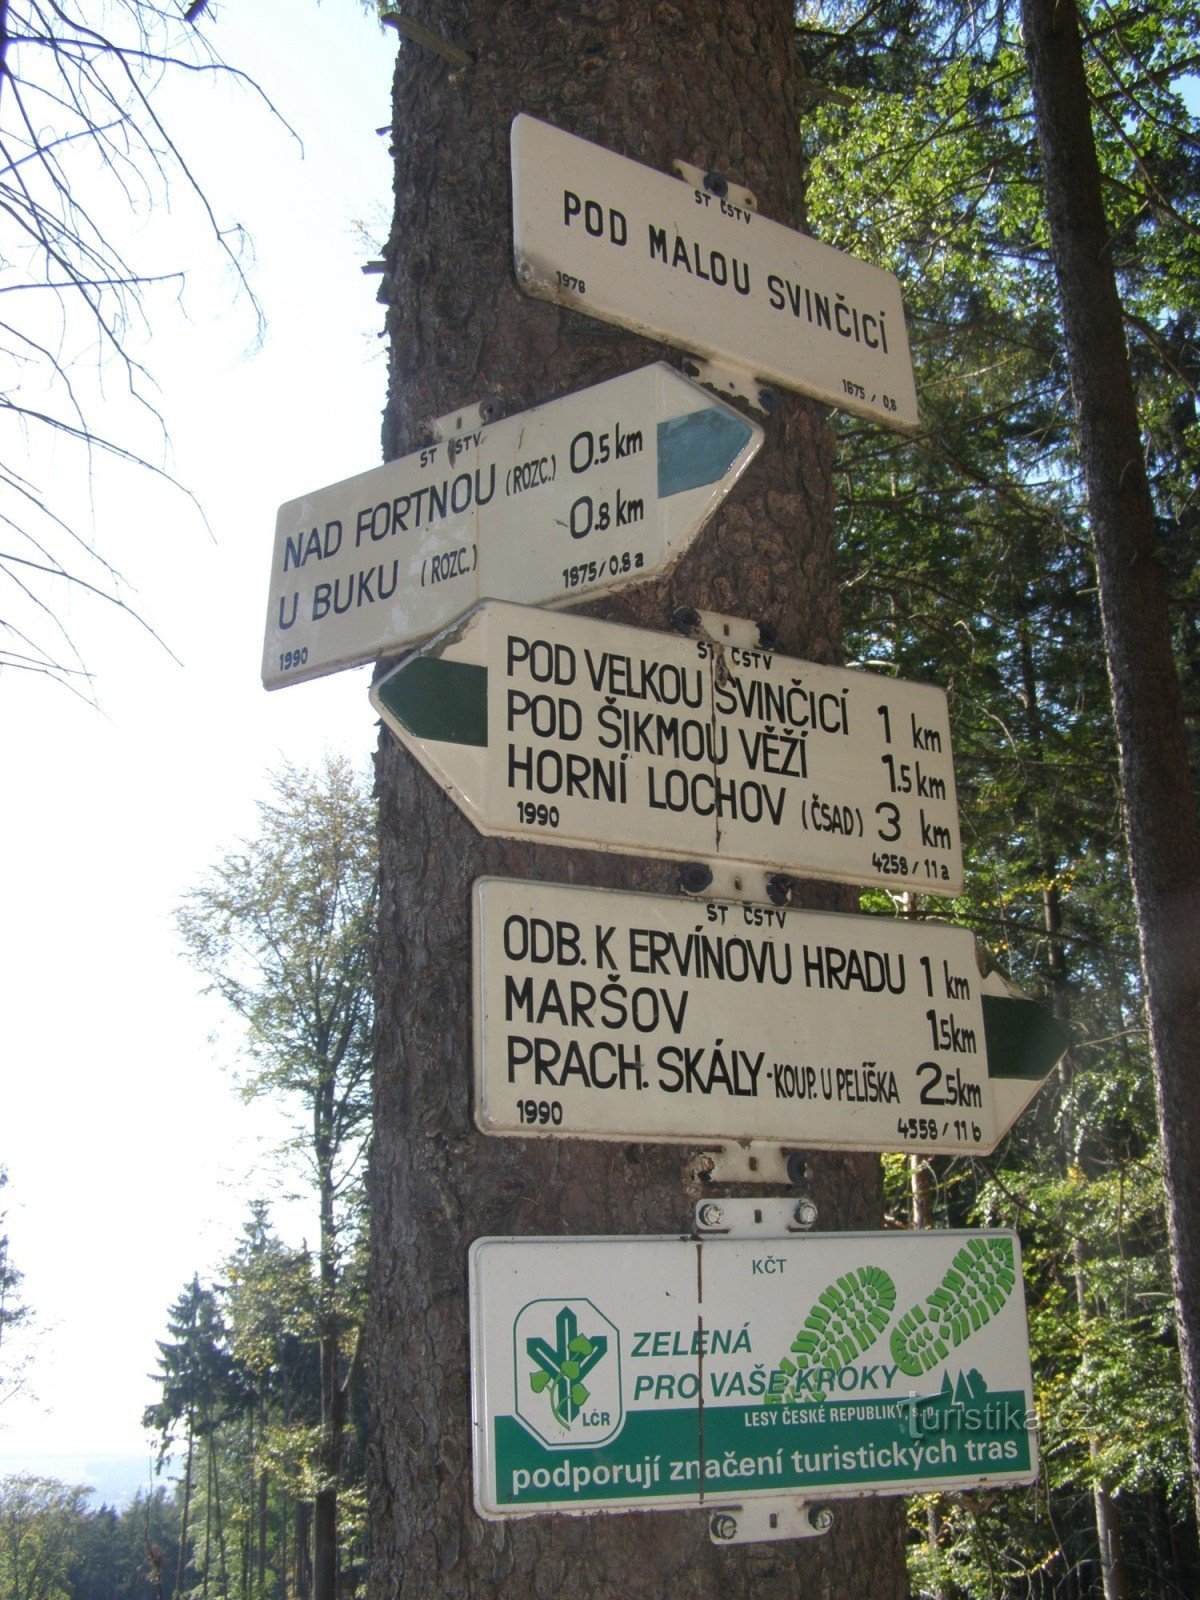 Prachovské skály - τουριστικό σταυροδρόμι Κάτω από το Malou Svinčicí